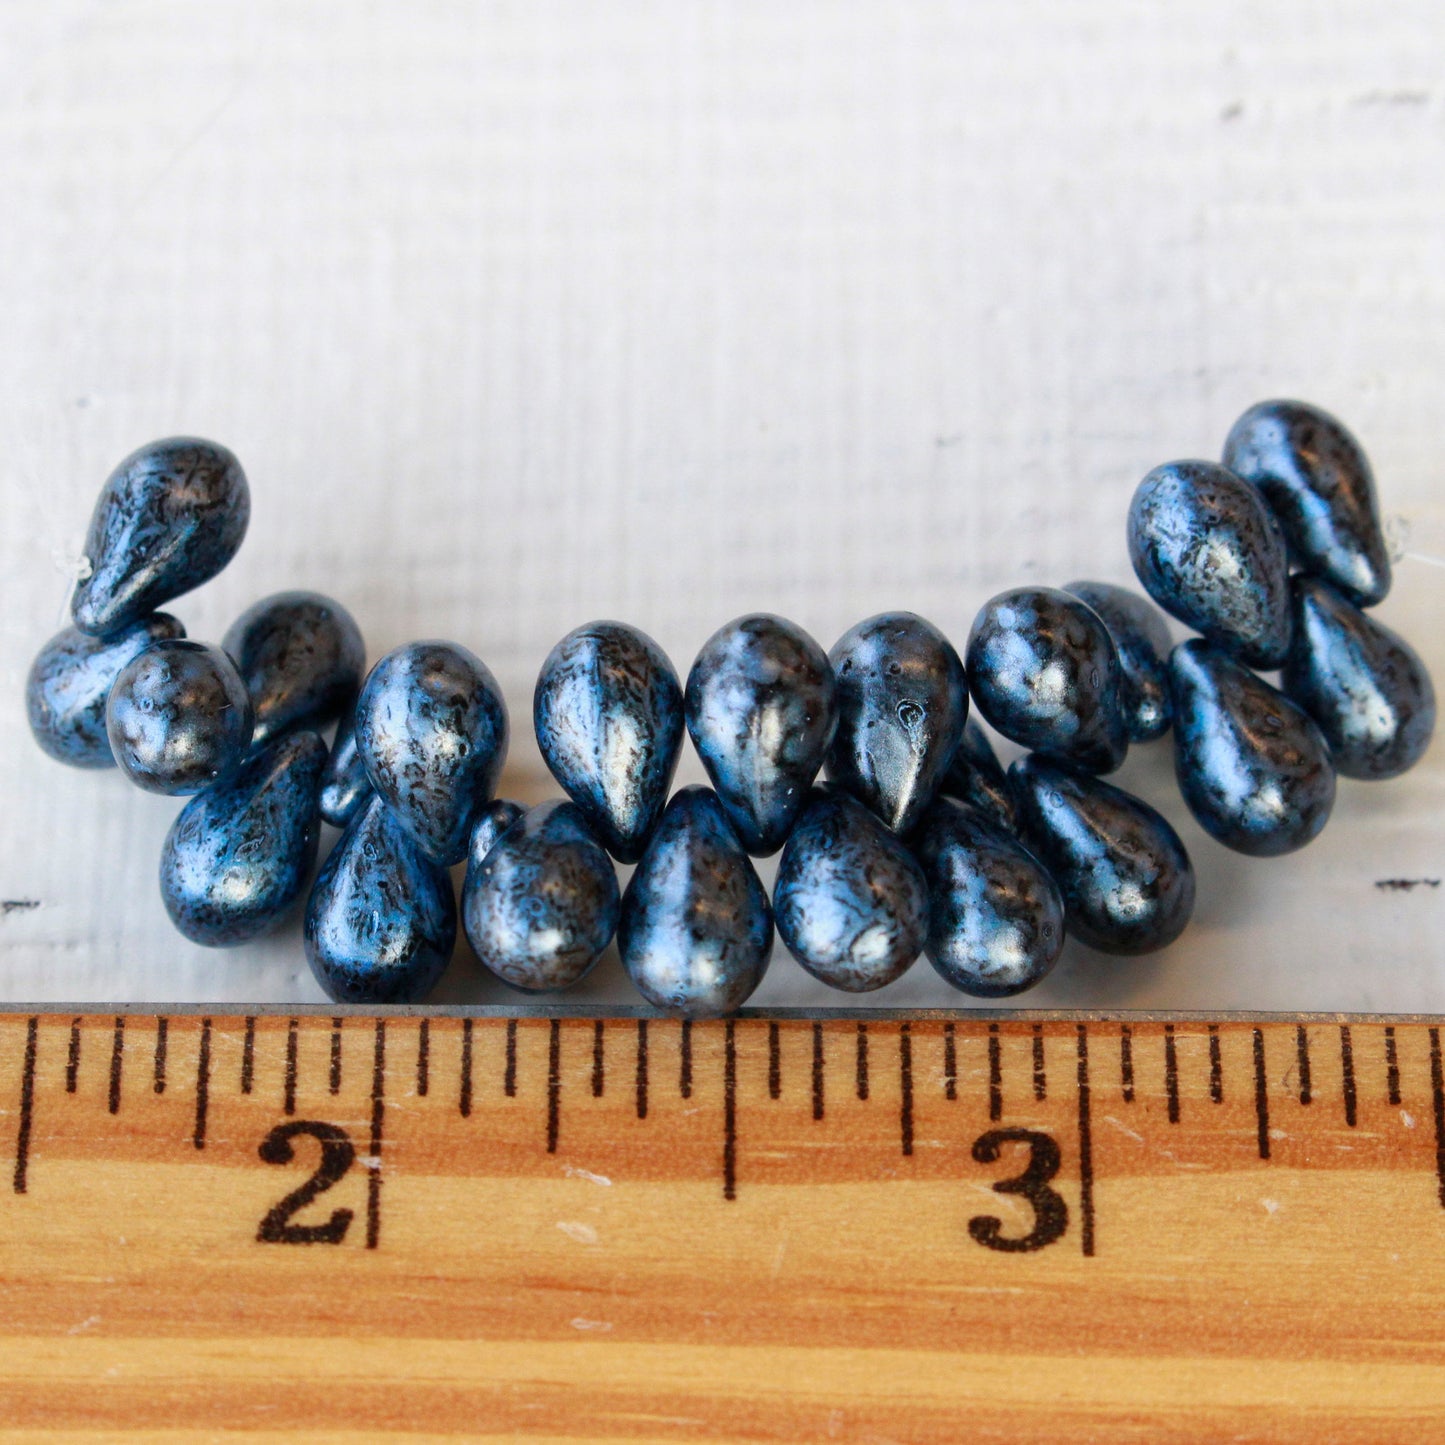 9x6mm Glass Teardrop Beads - Metallic Blue - 25 Beads